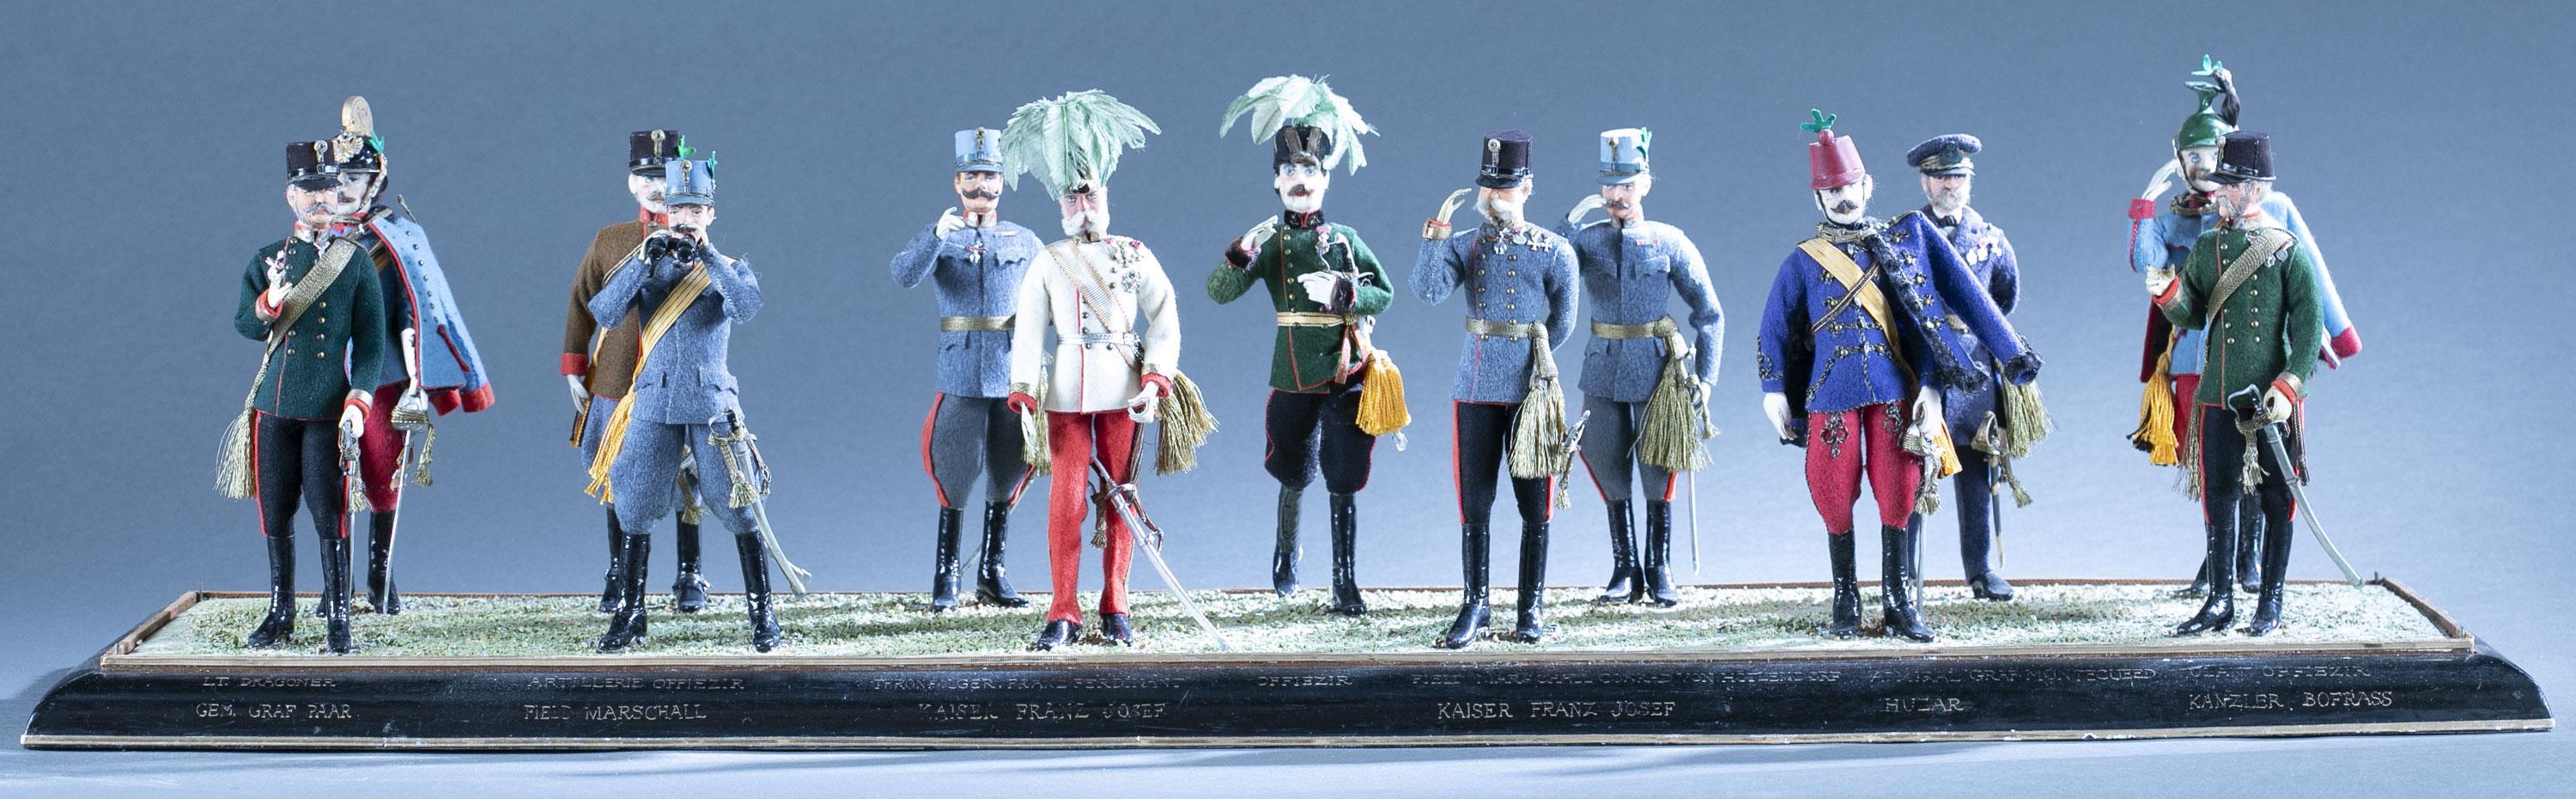 13 K.U.K. Austrian Military Krauhs Figurines